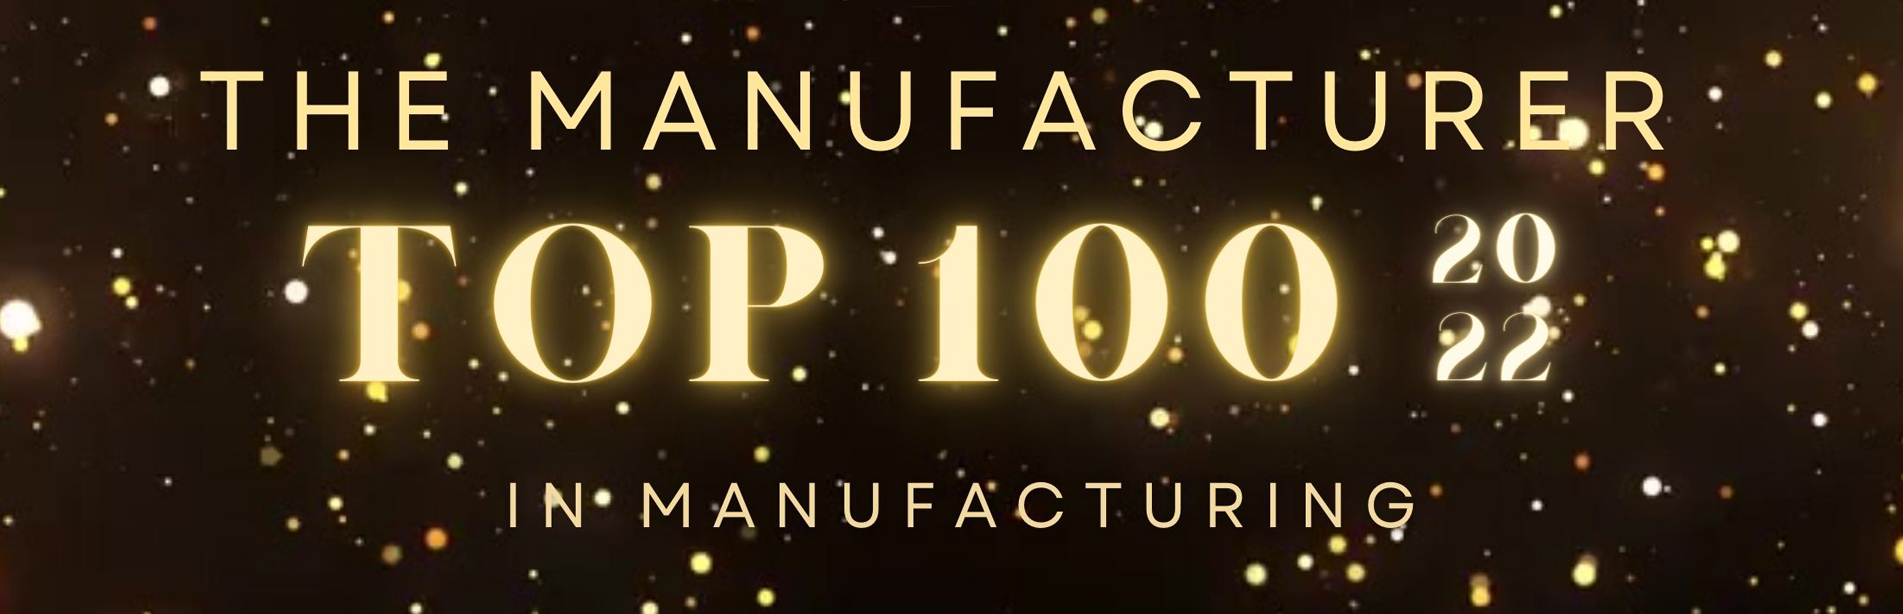 Top 100 manufacturer